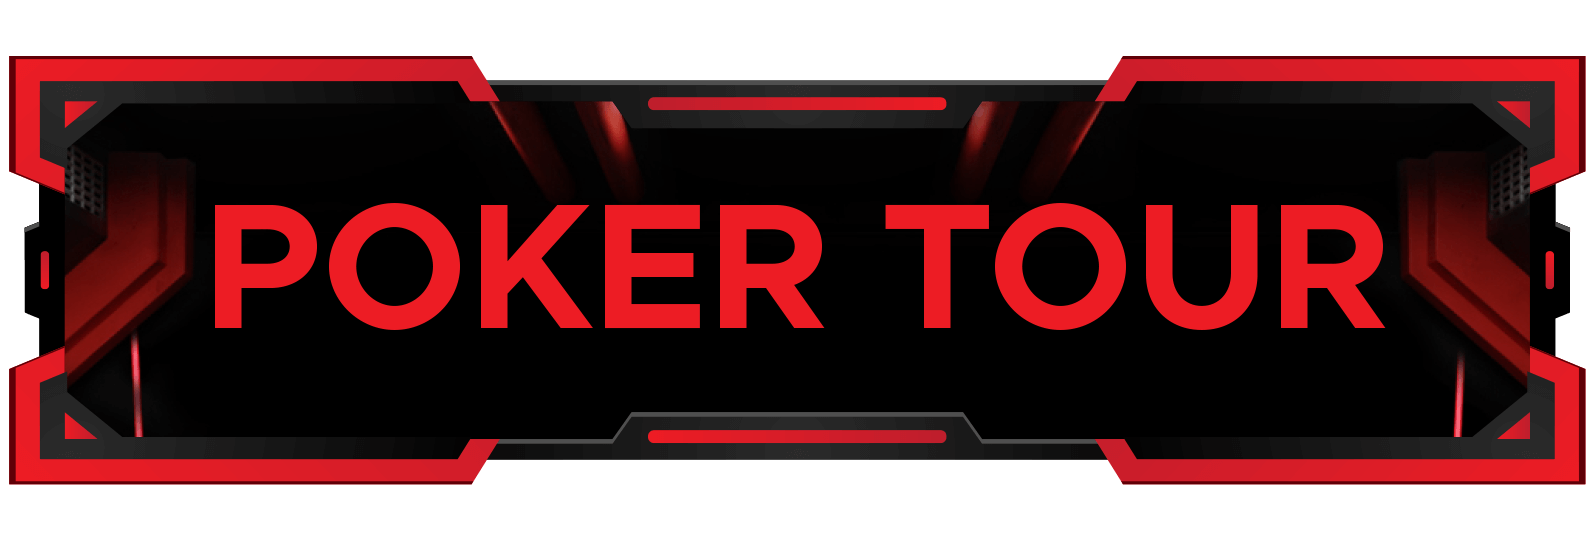 Red Dragon Poker Tour Button